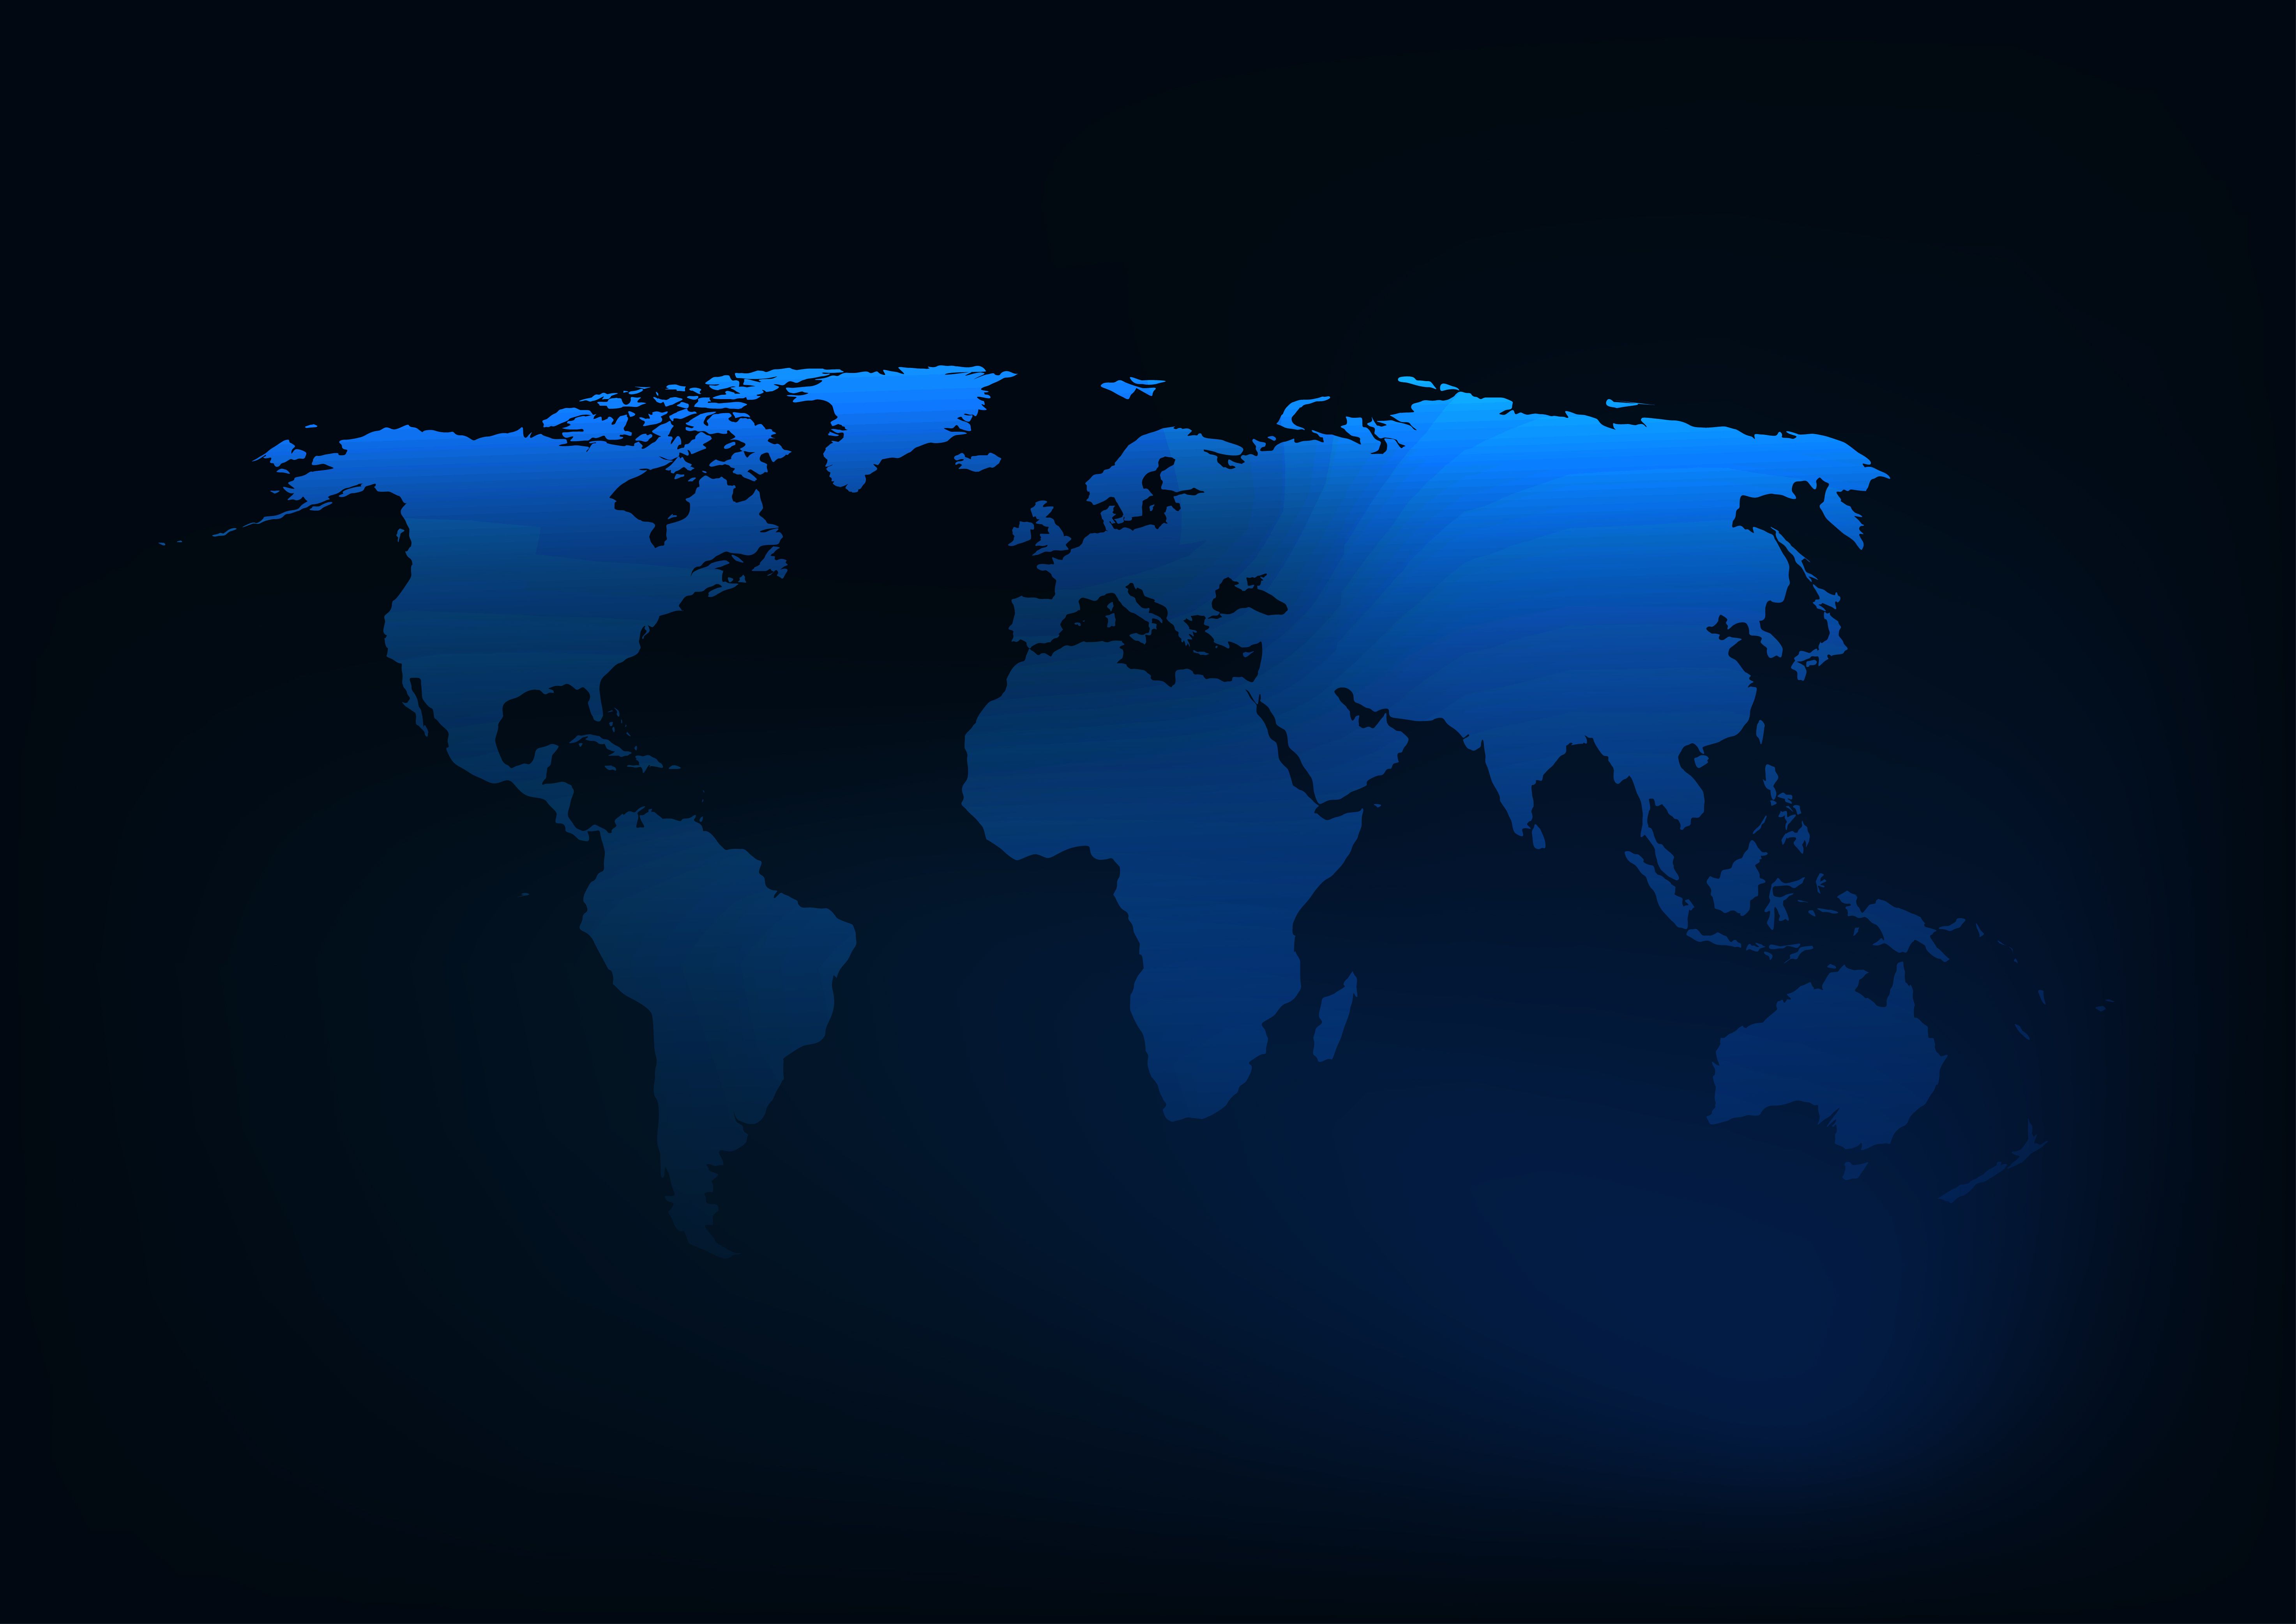 Digital Blue World Map